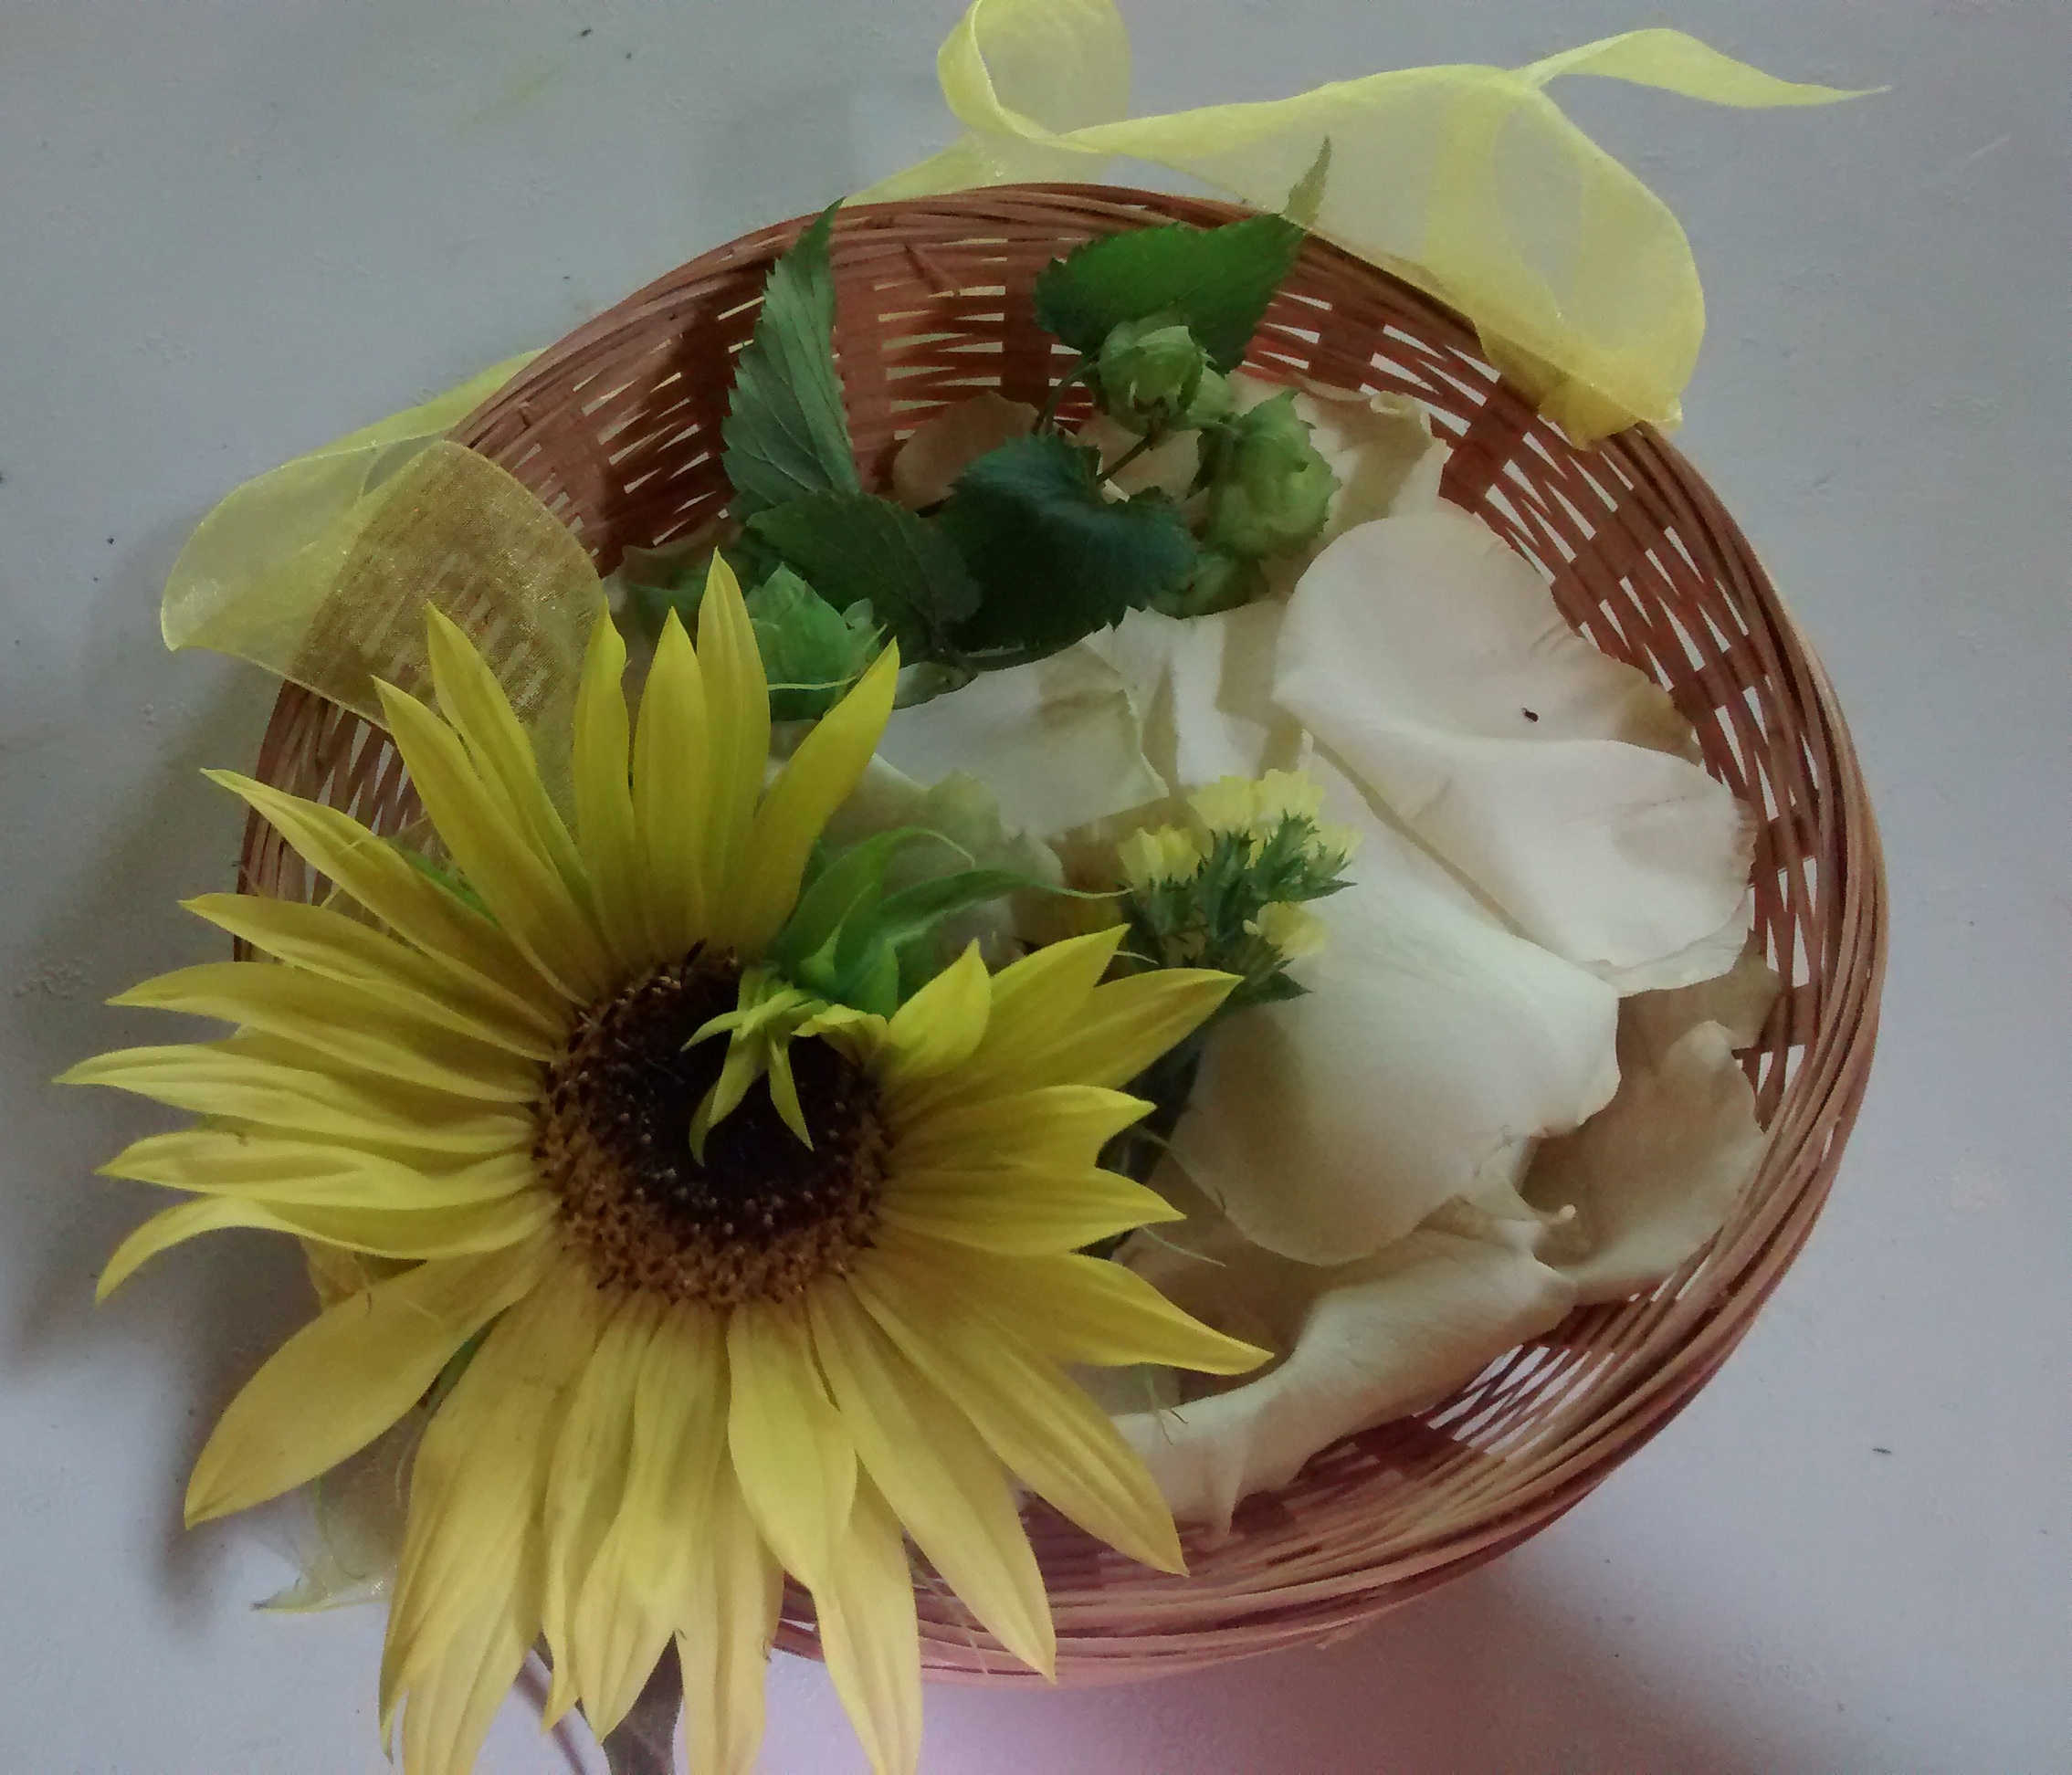 Flower girl basket - hops, rose petals, sunflower